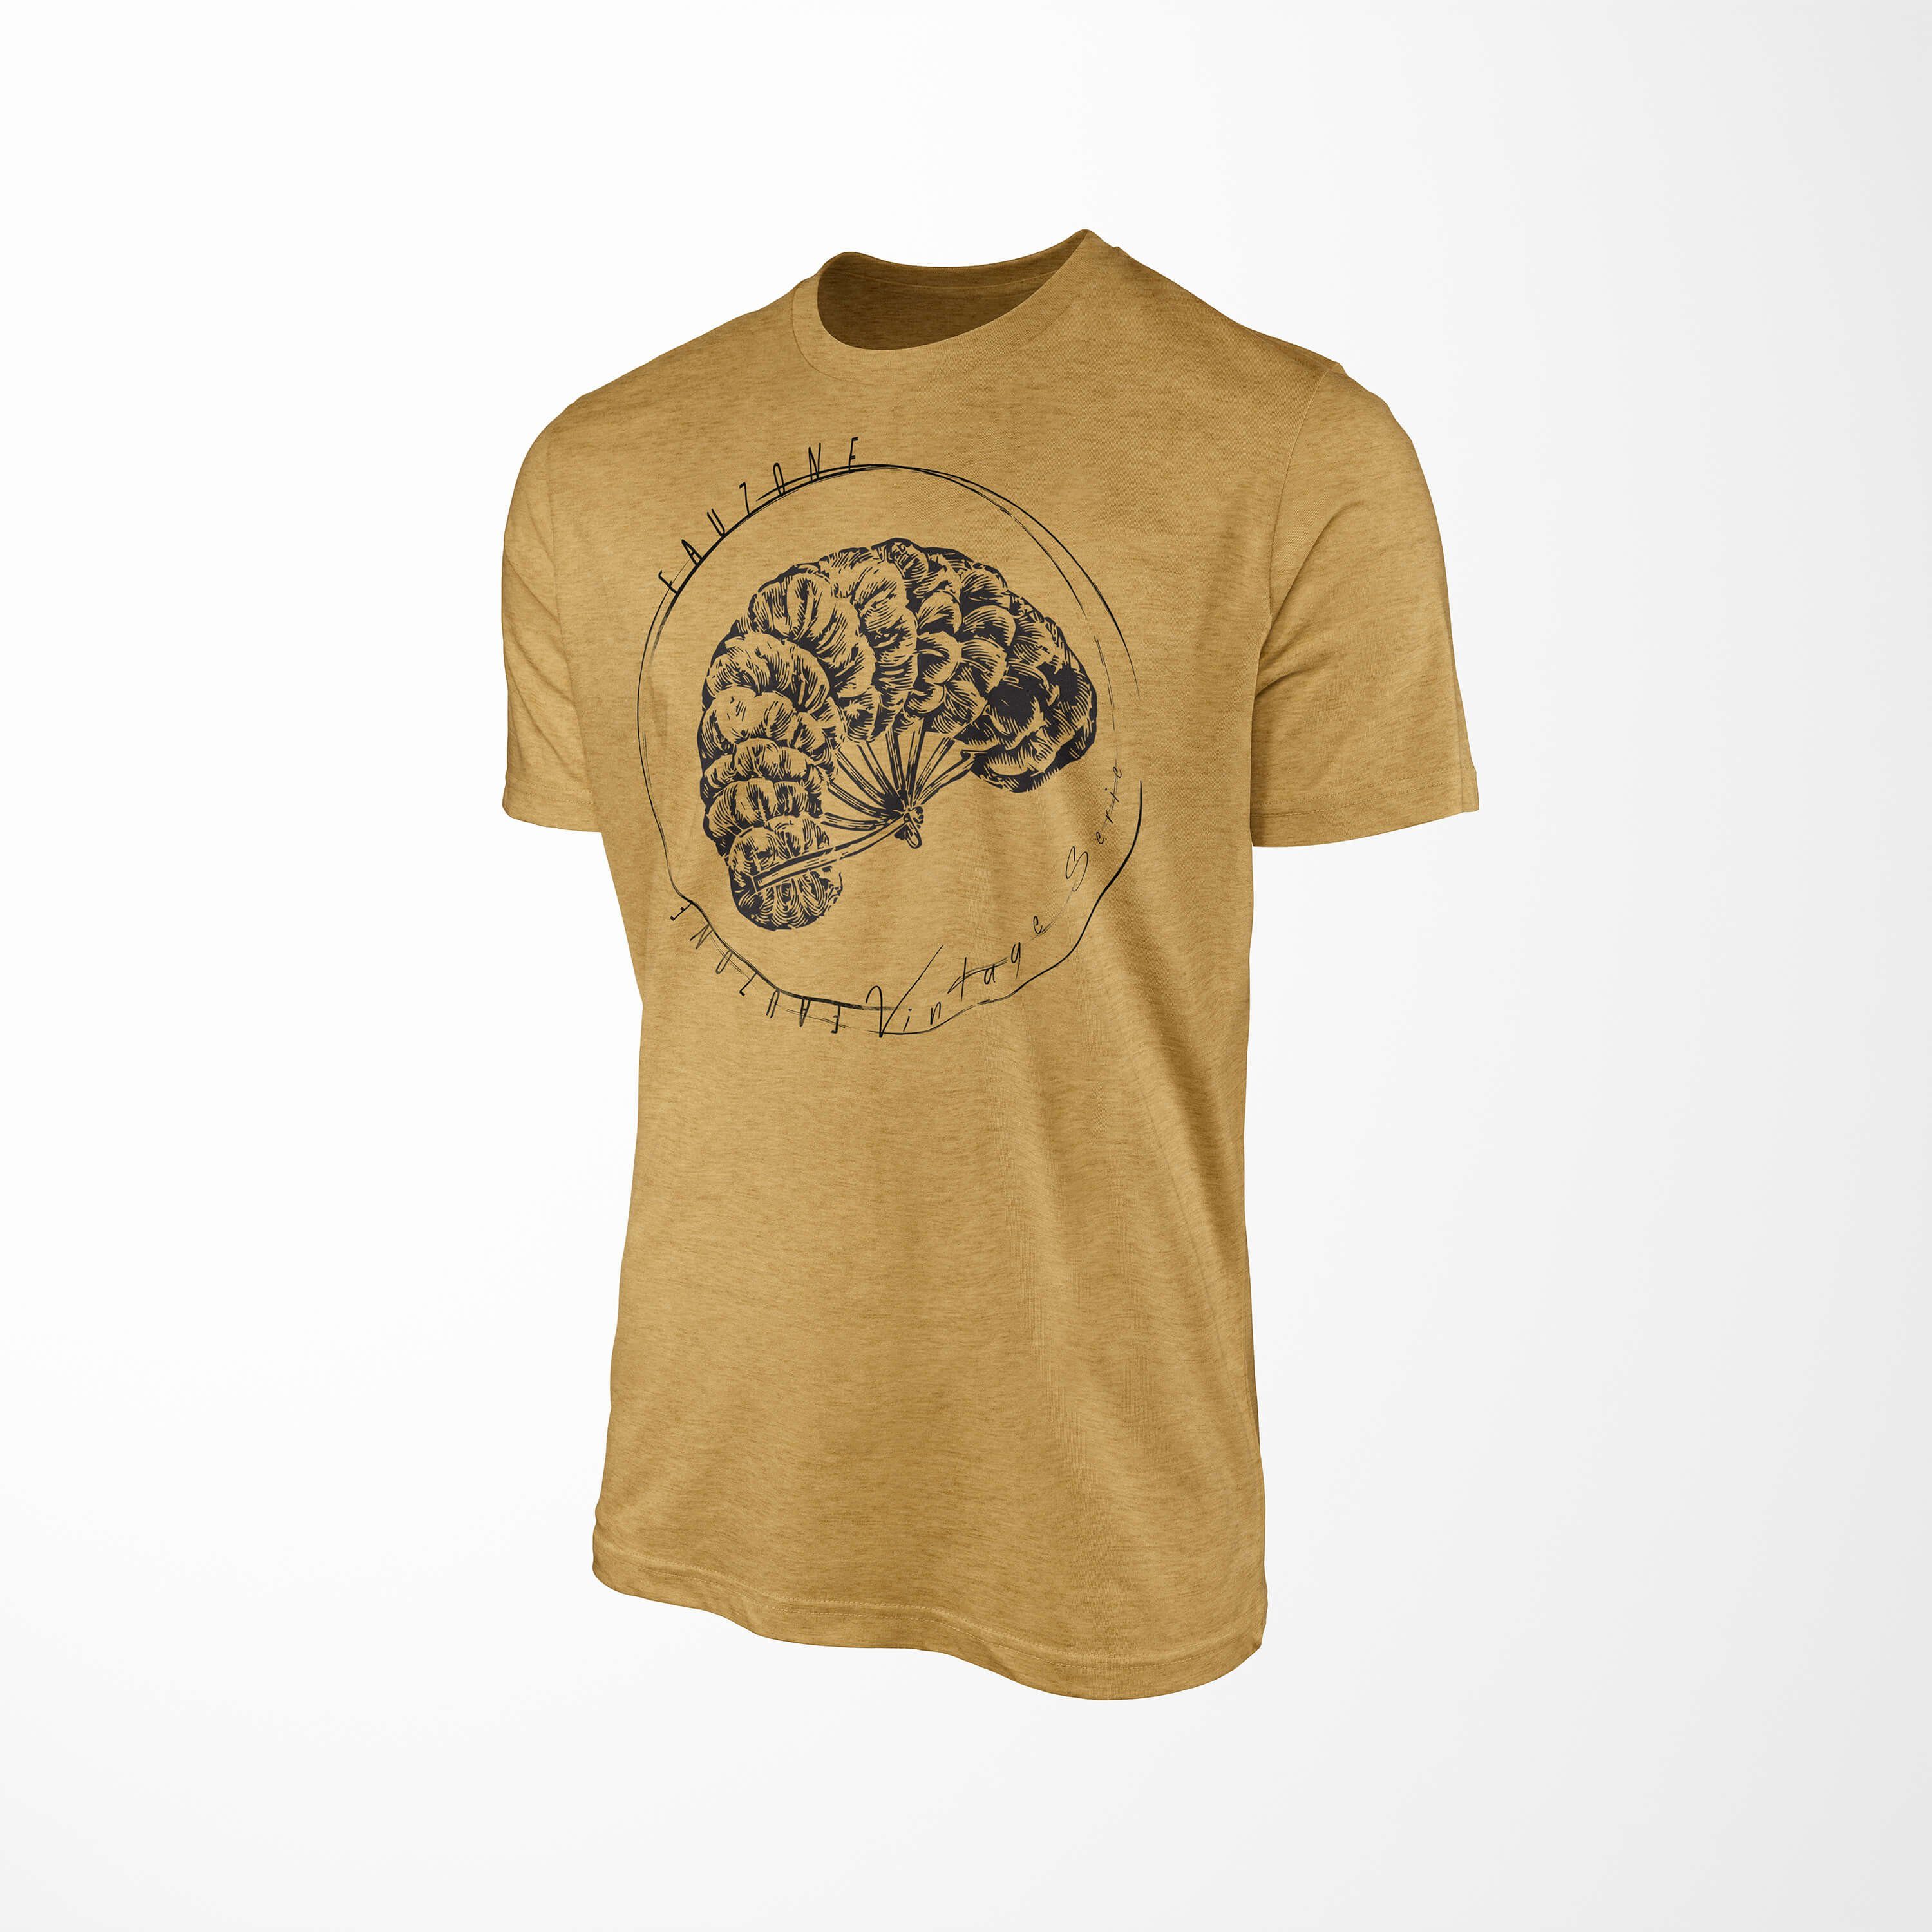 Sinus Art T-Shirt Vintage Herren Antique Handfächer T-Shirt Gold